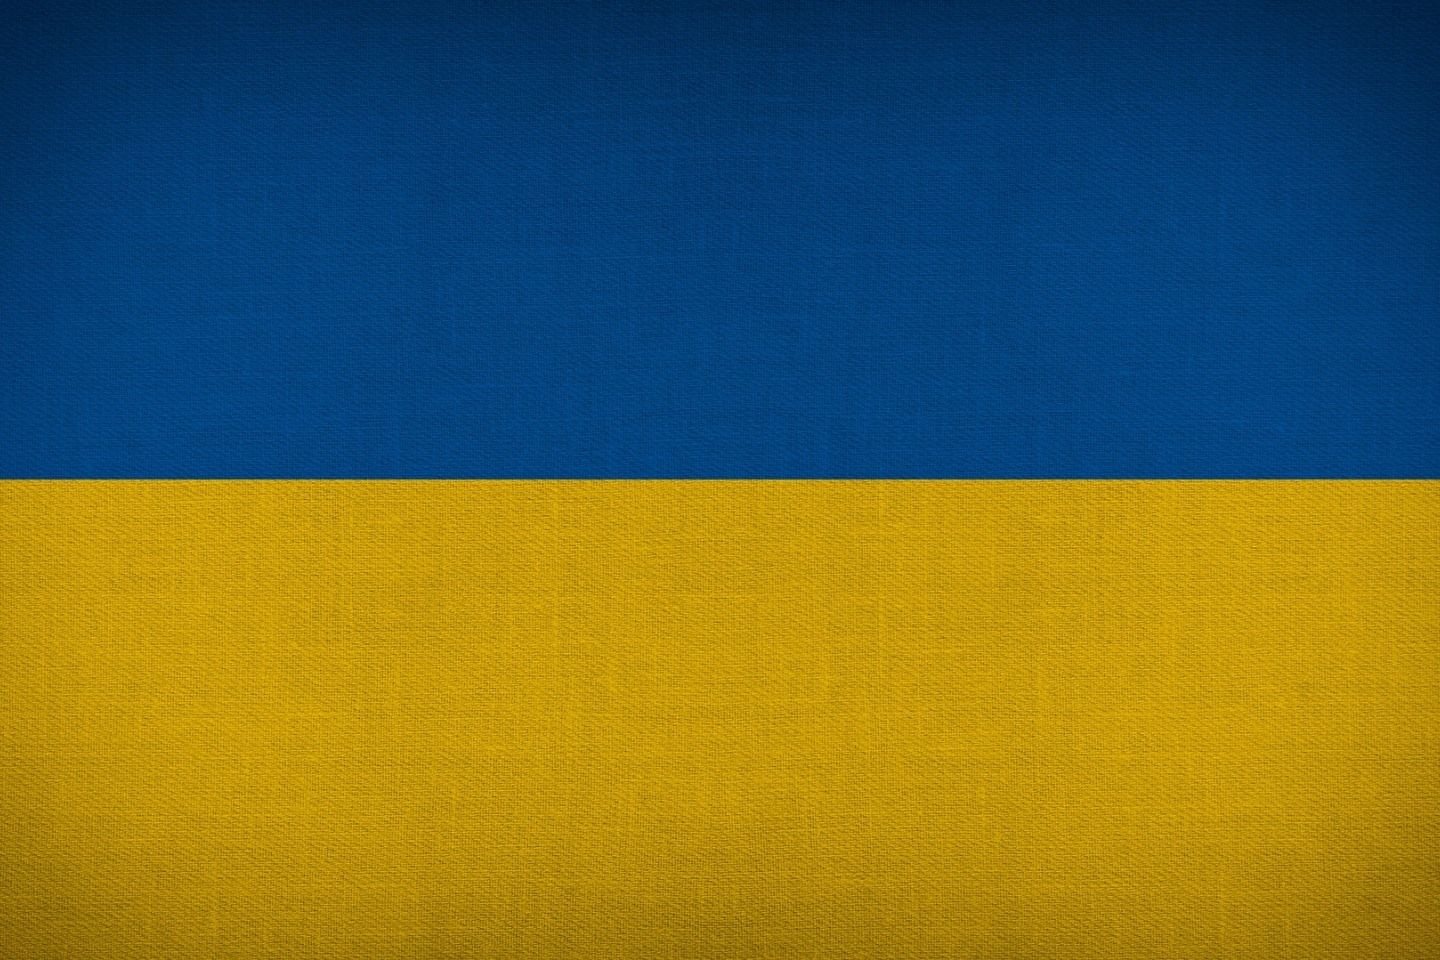 Ukraine Flag image downloaded free from Pixabay.com